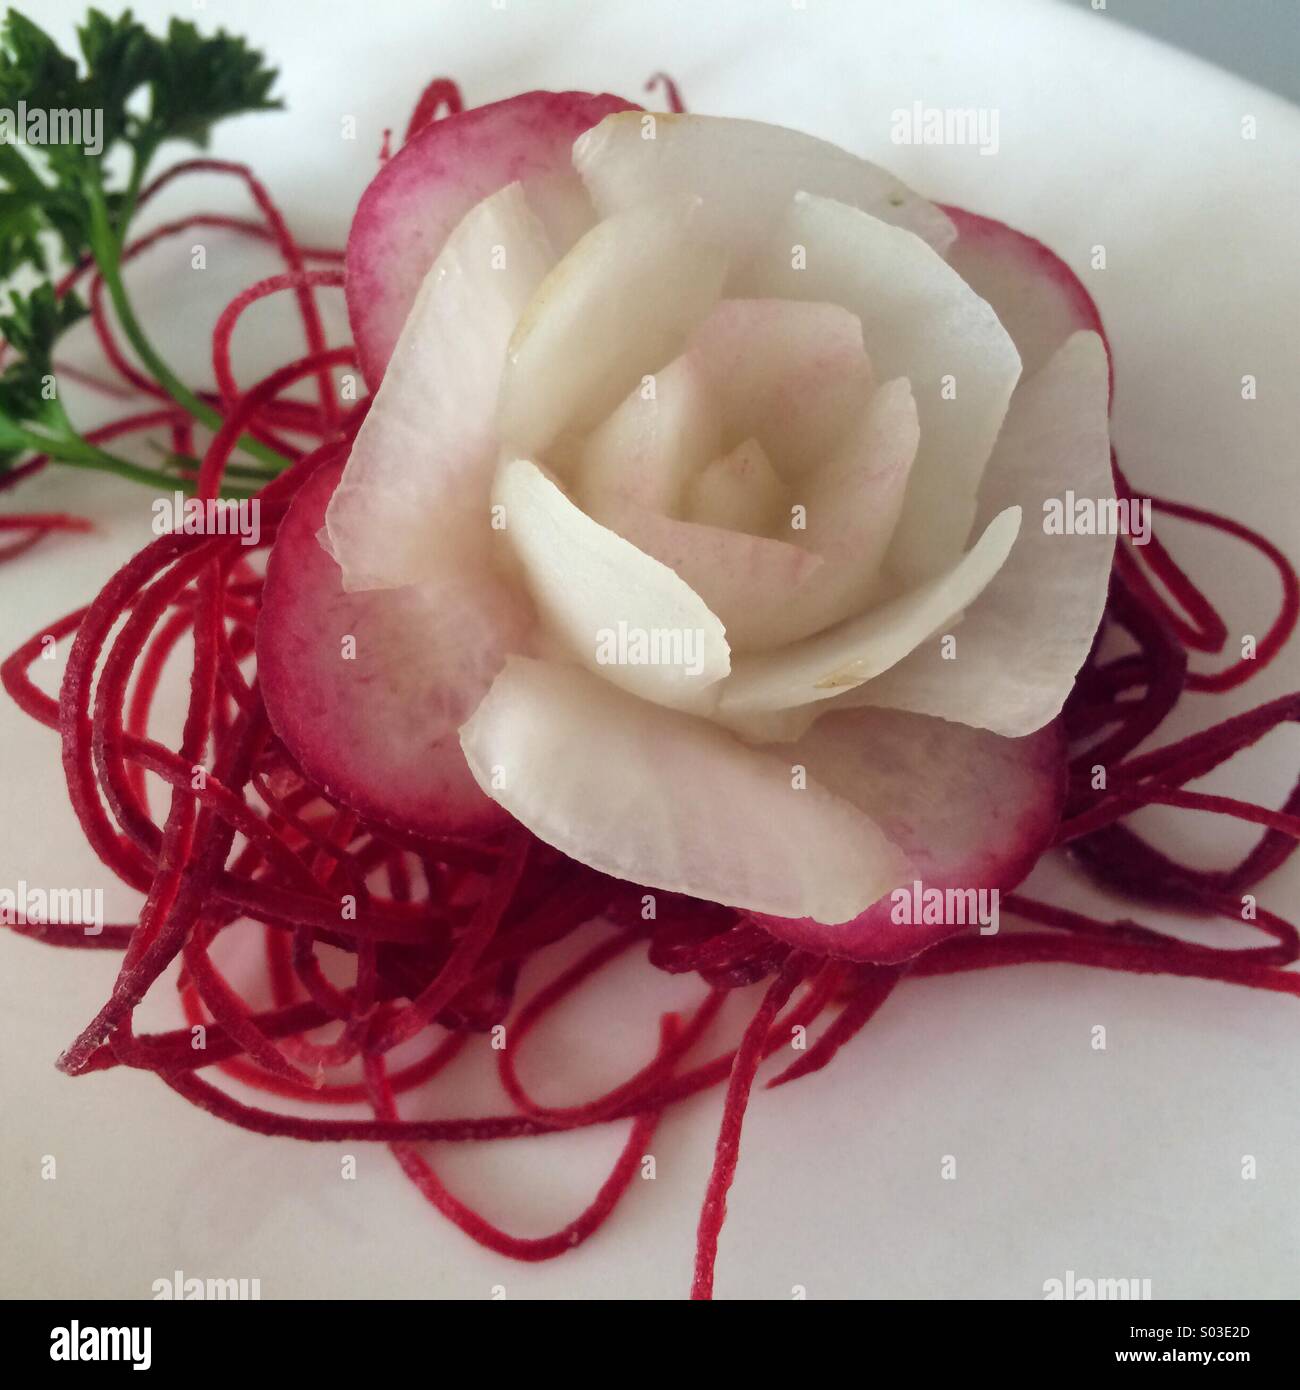 Radish rose garnish with parsley Stock Photo